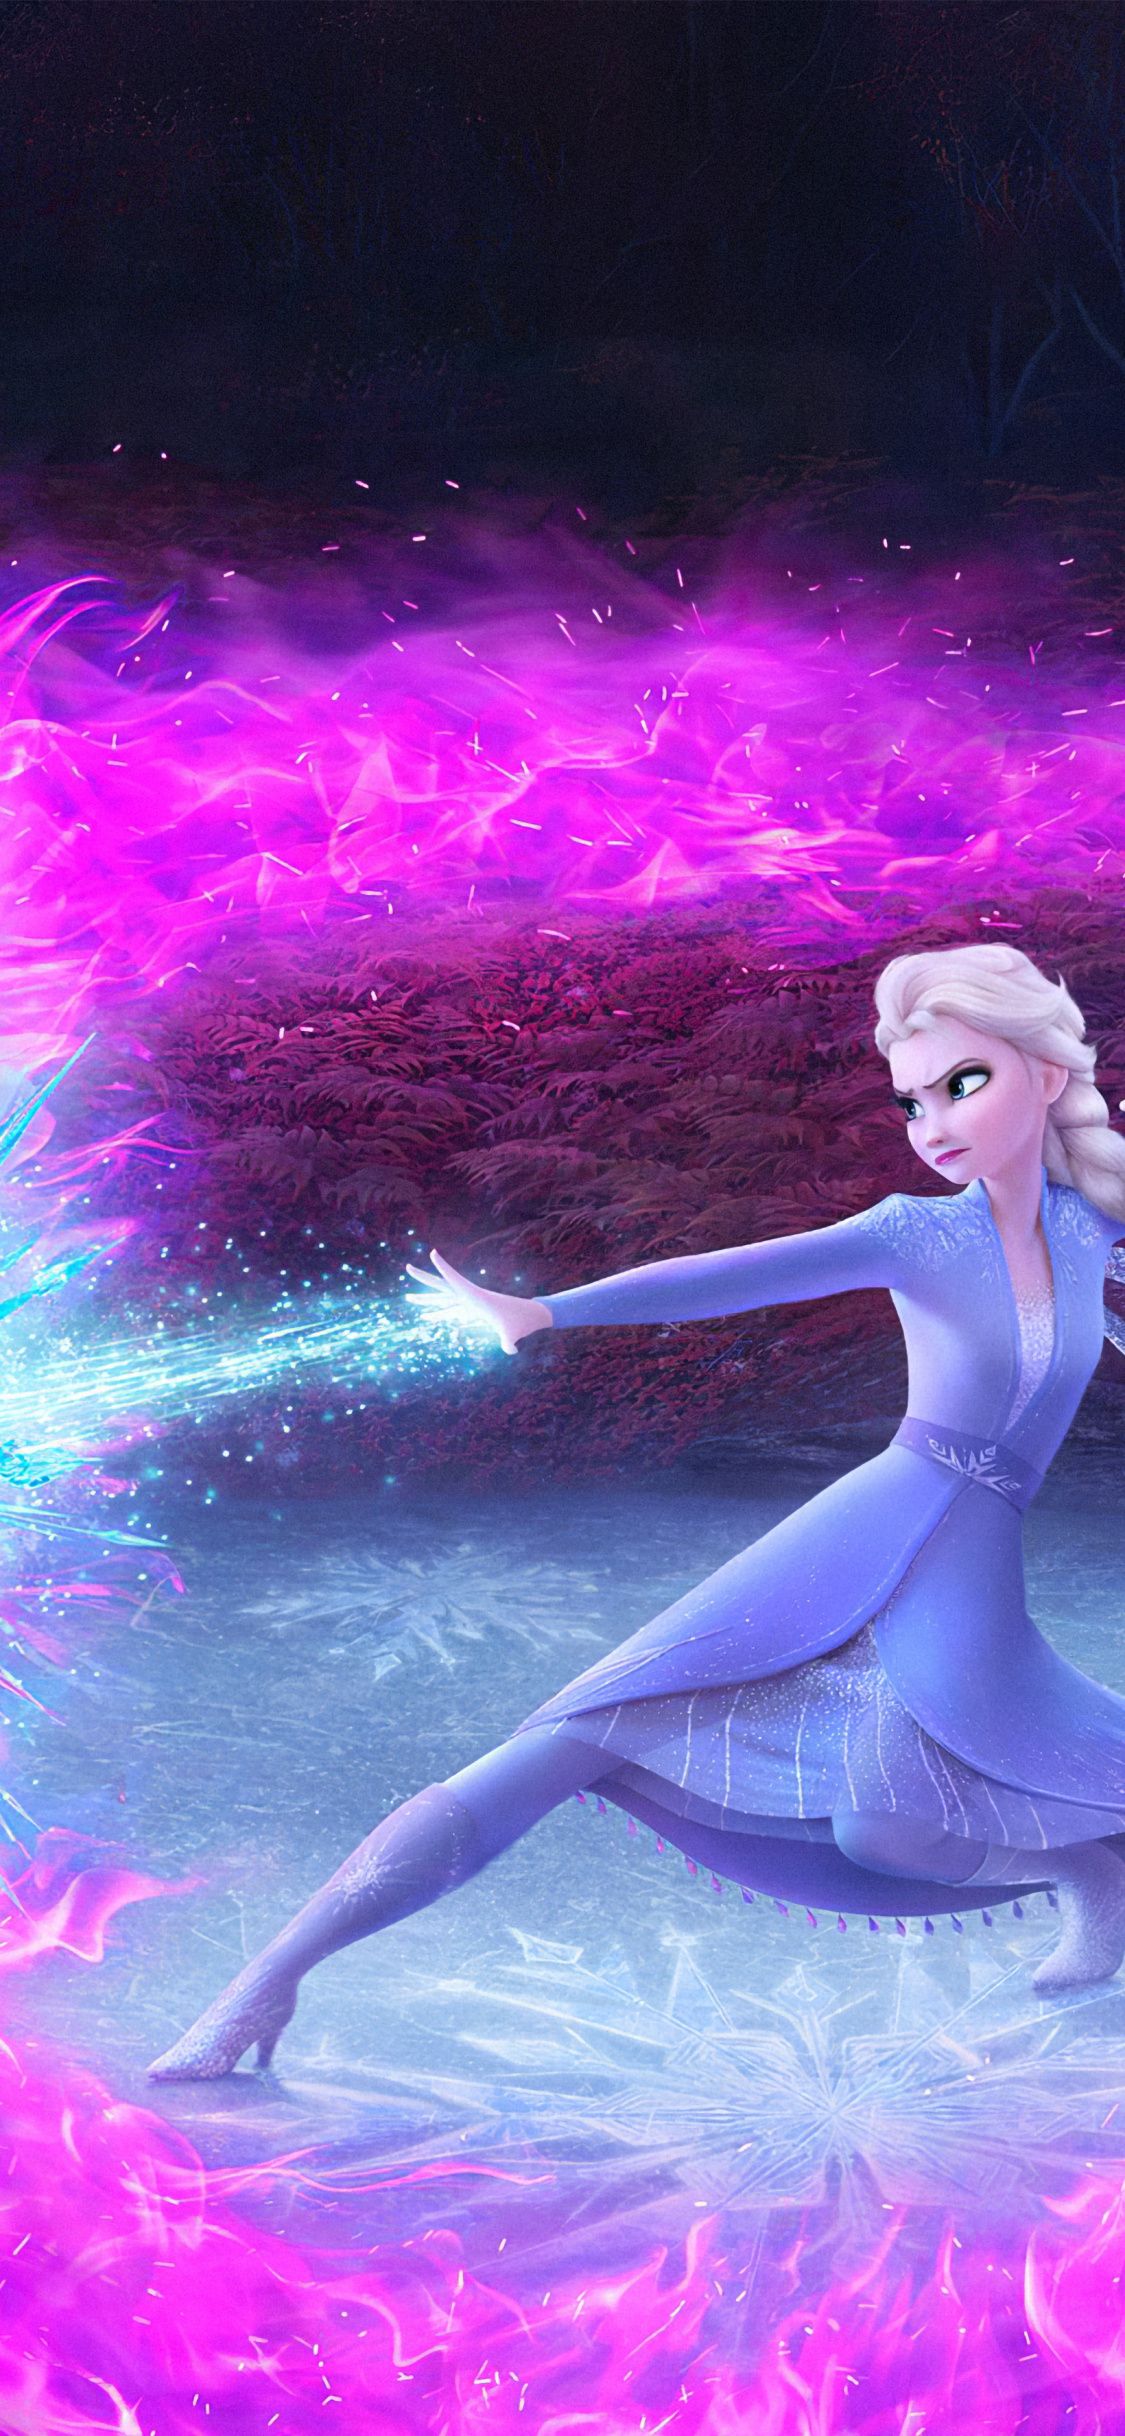 Angry Elsa, Frozen Disney movie wallpaper. Disney princess drawings, Disney frozen elsa art, Disney princess image